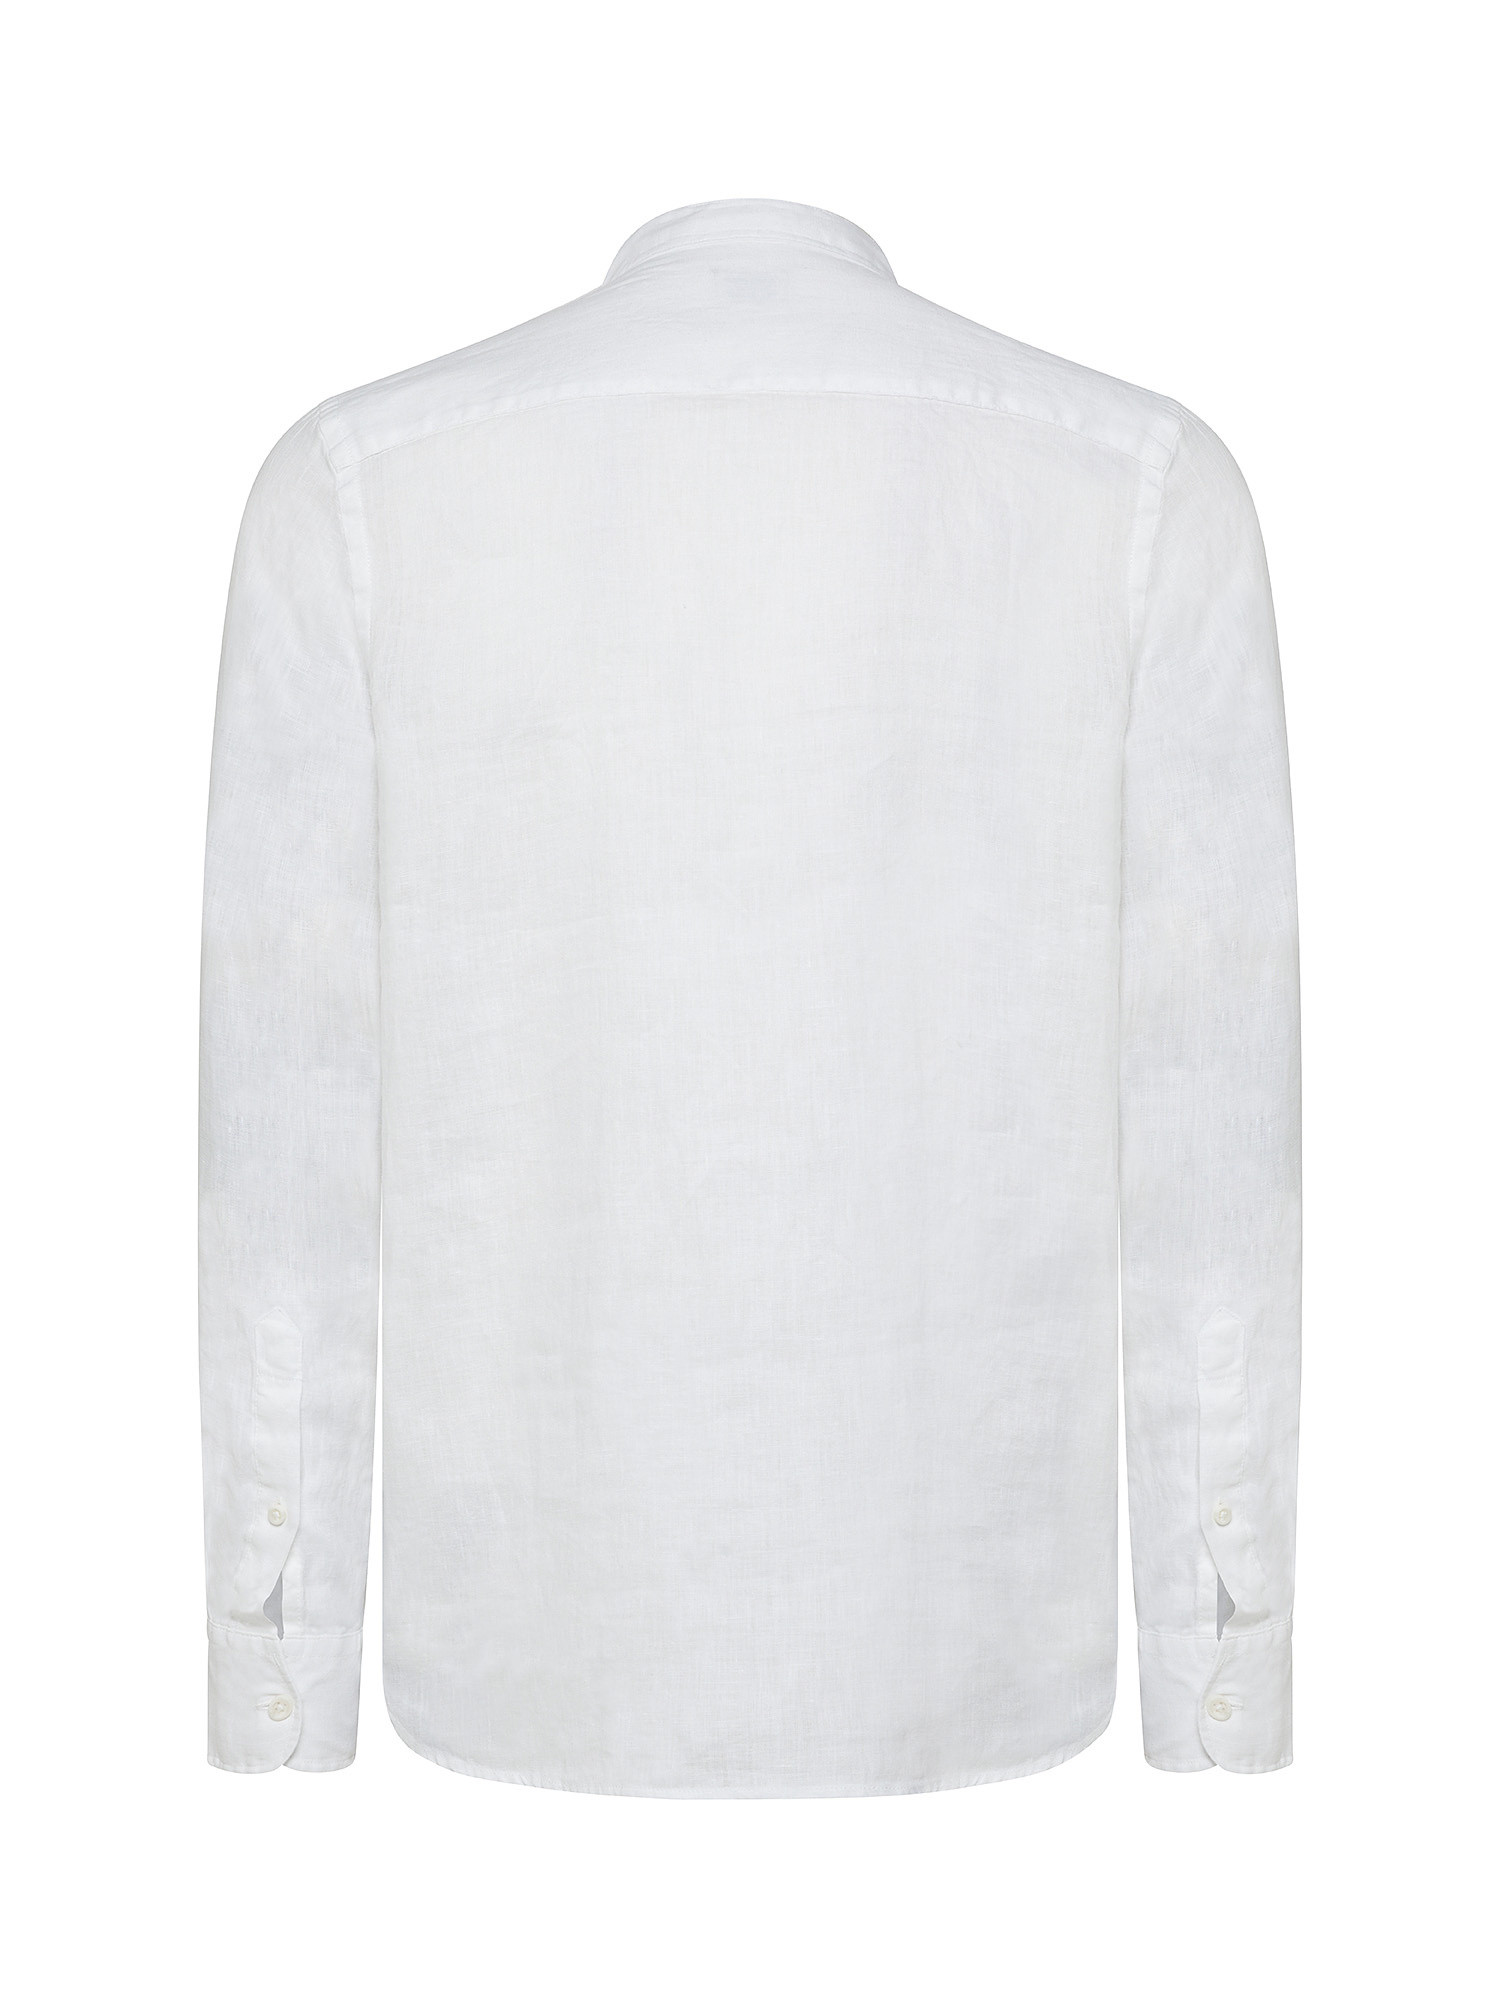 JCT - Camicia coreana in puro lino, Bianco, large image number 1